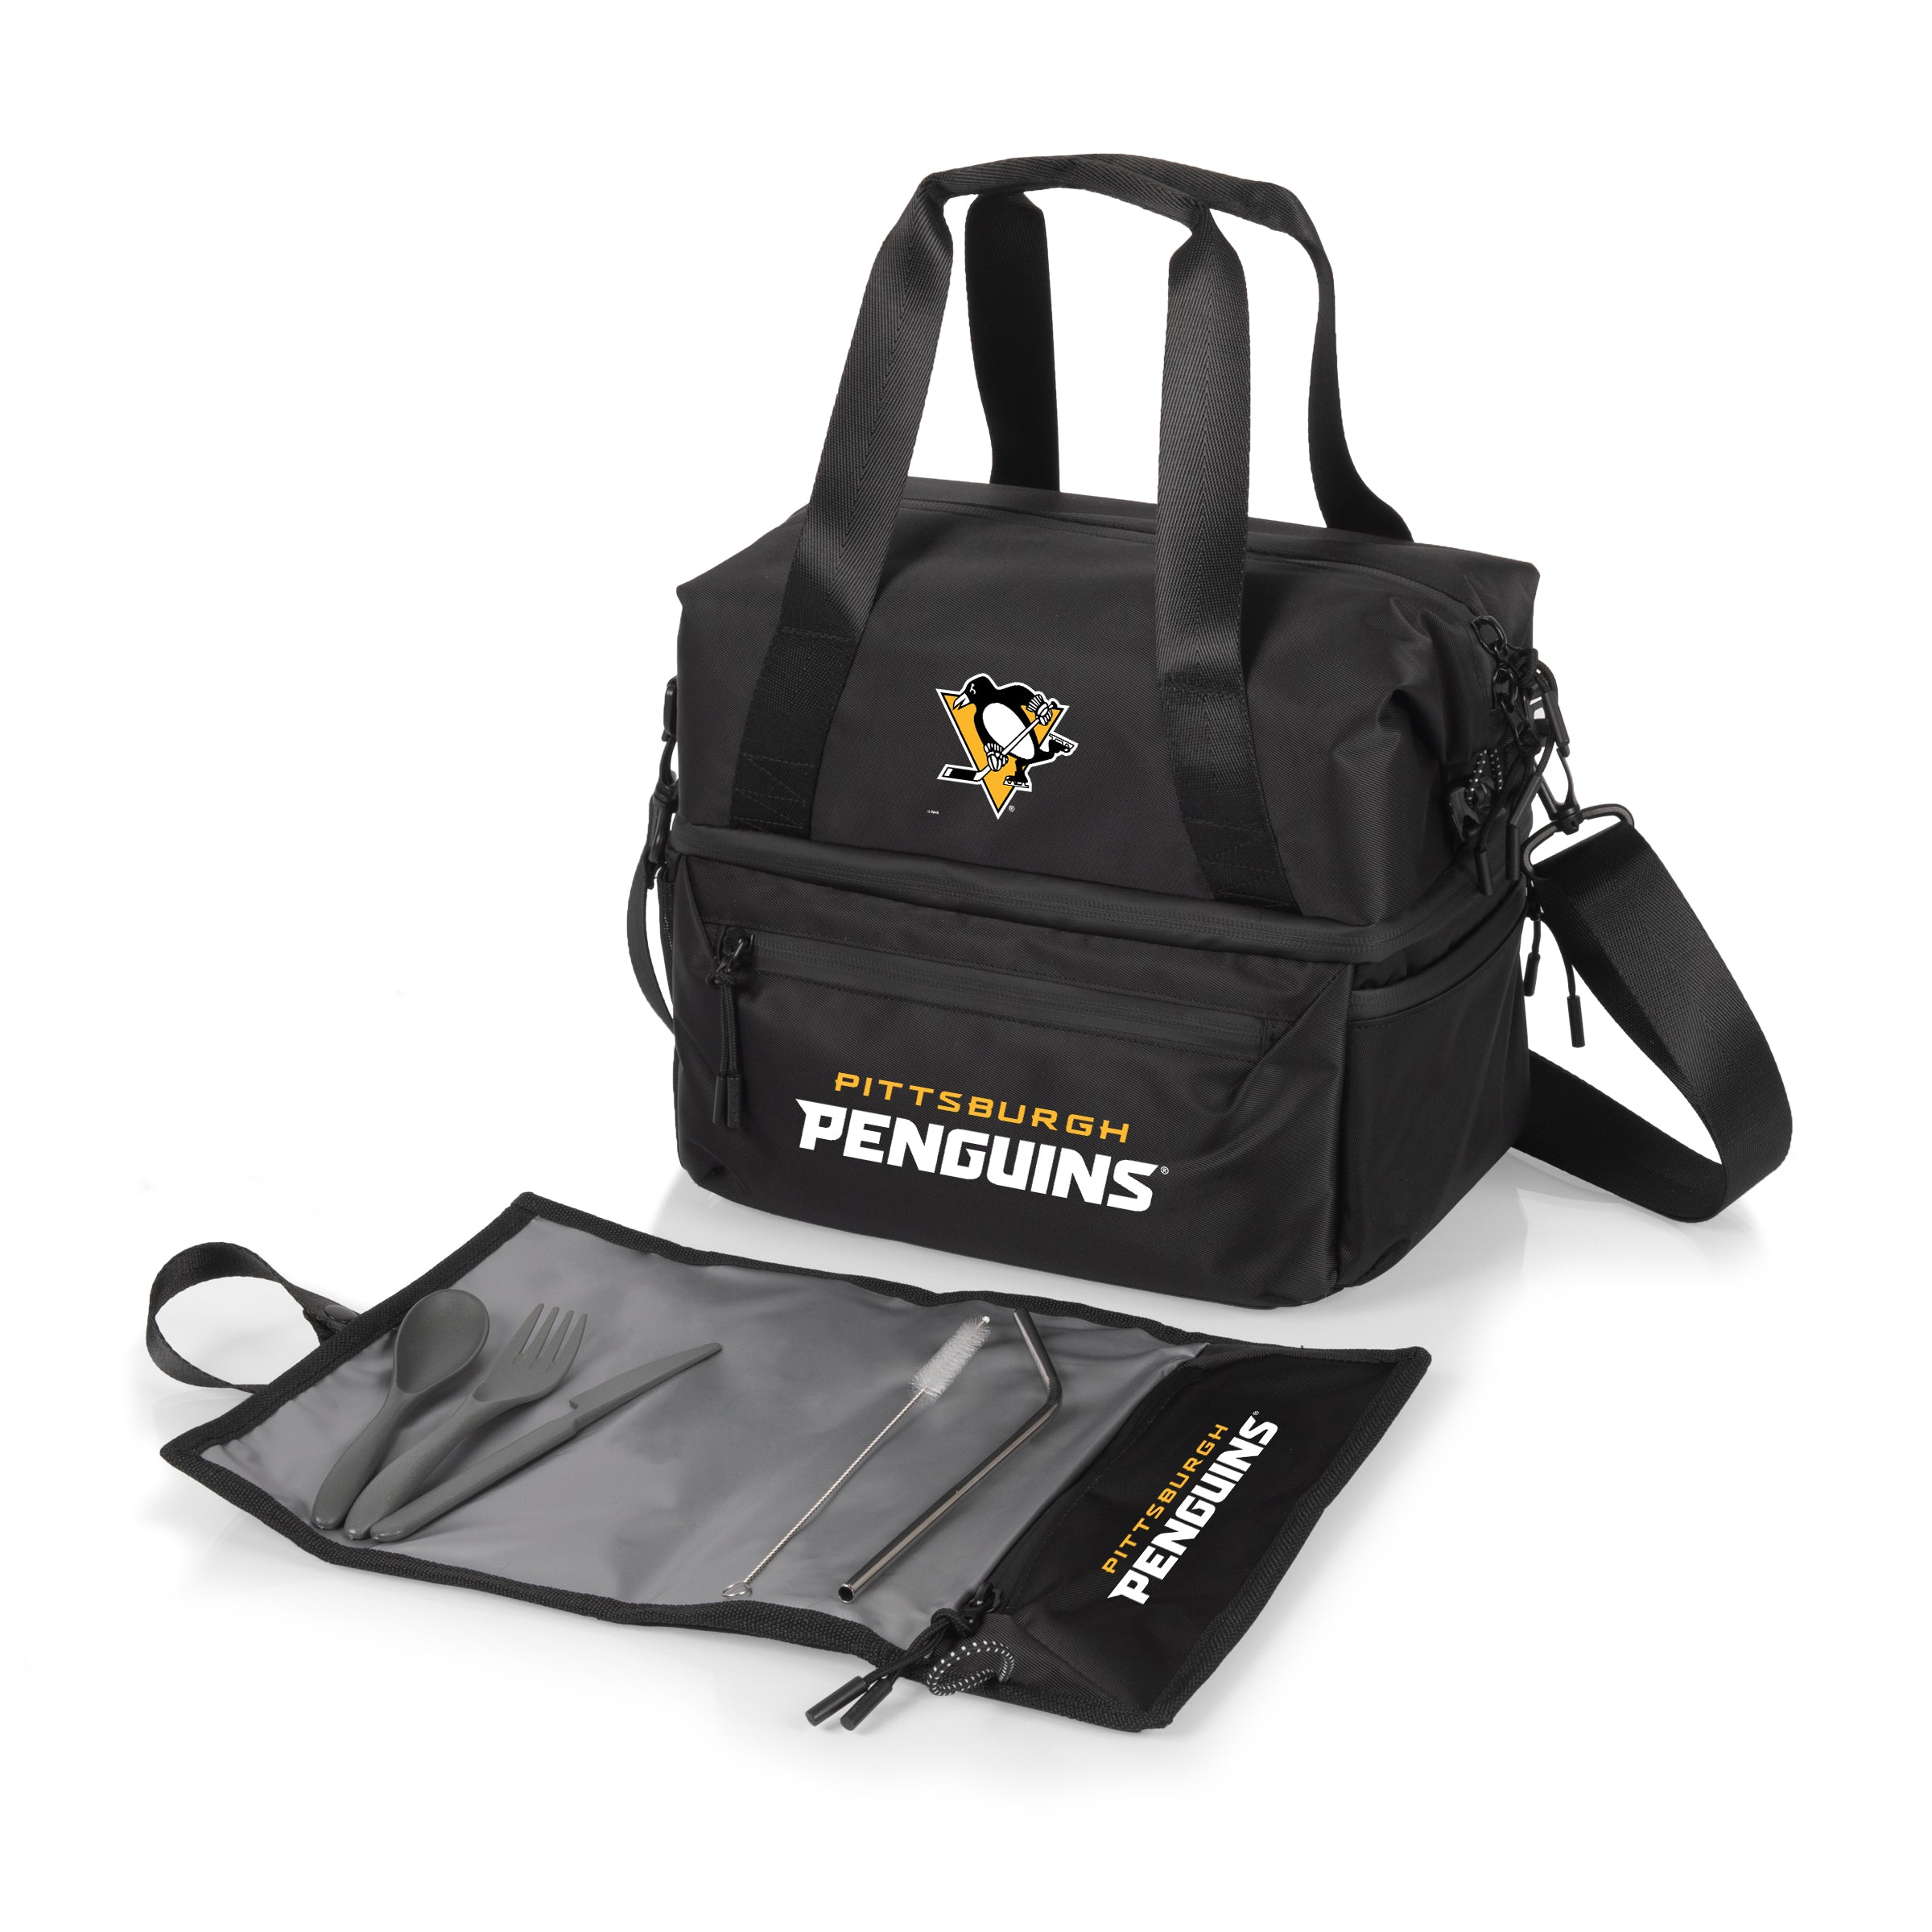 Pittsburgh Penguins - Tarana Lunch Bag Cooler with Utensils